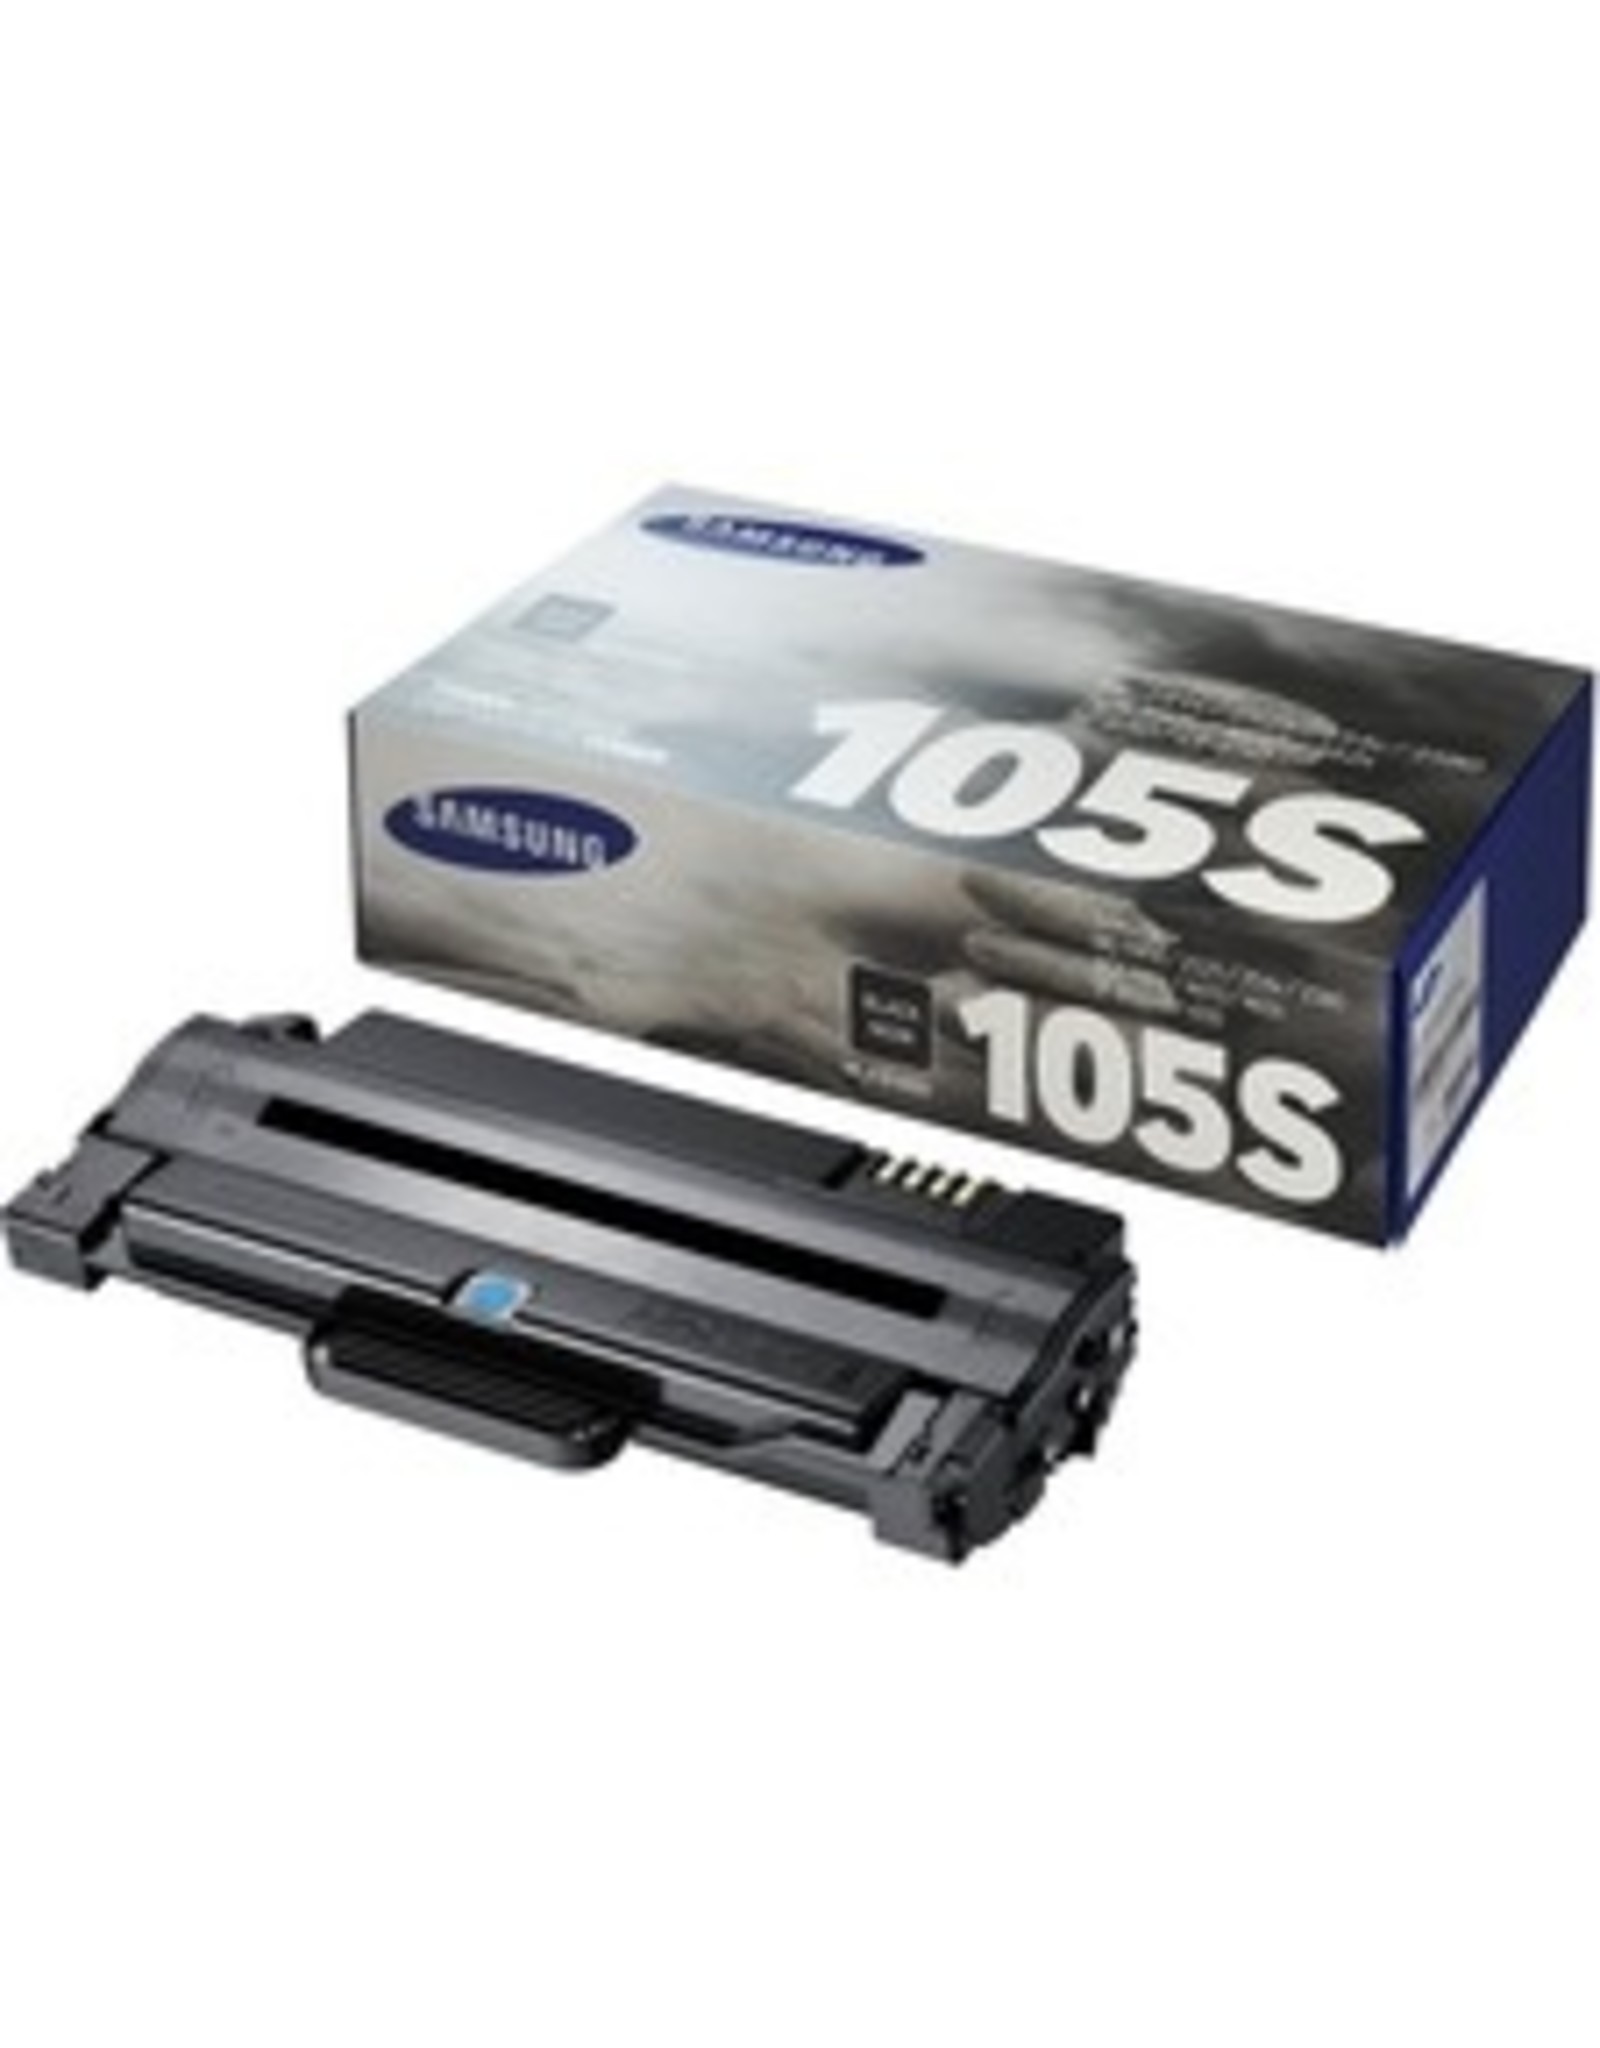 Samsung MLT-D105S Original Toner Cartridge - Black